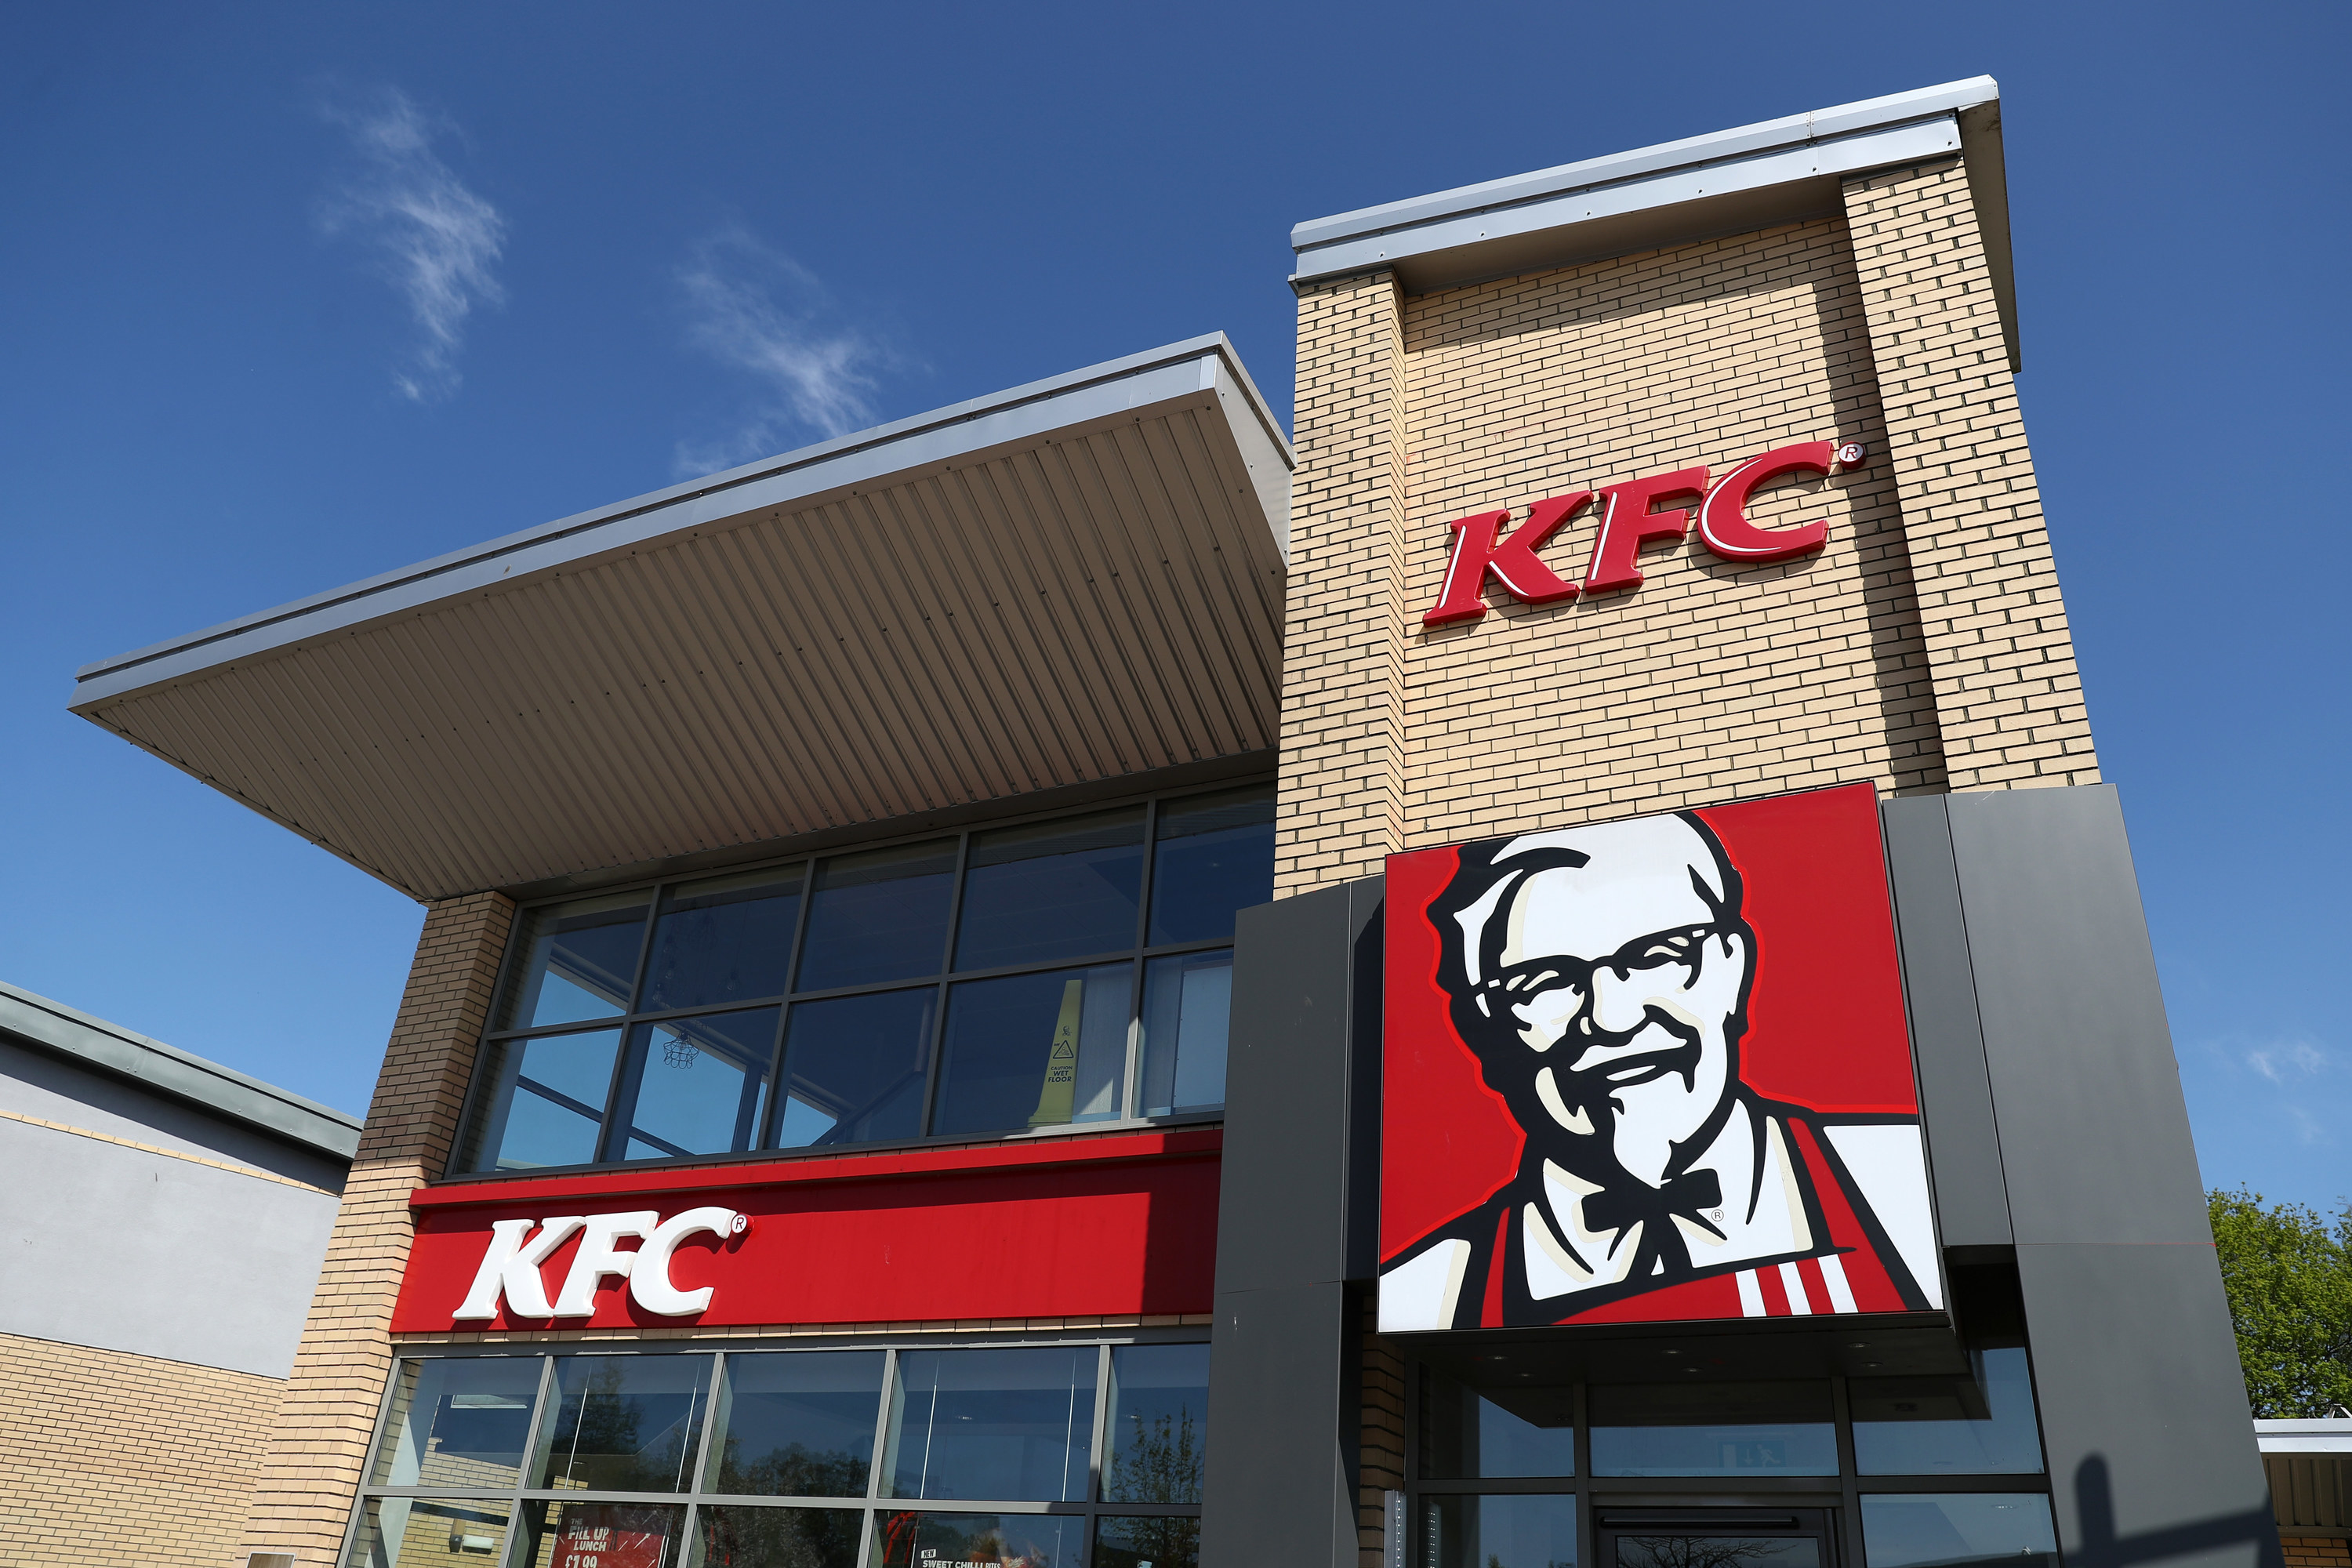 A KFC storefront